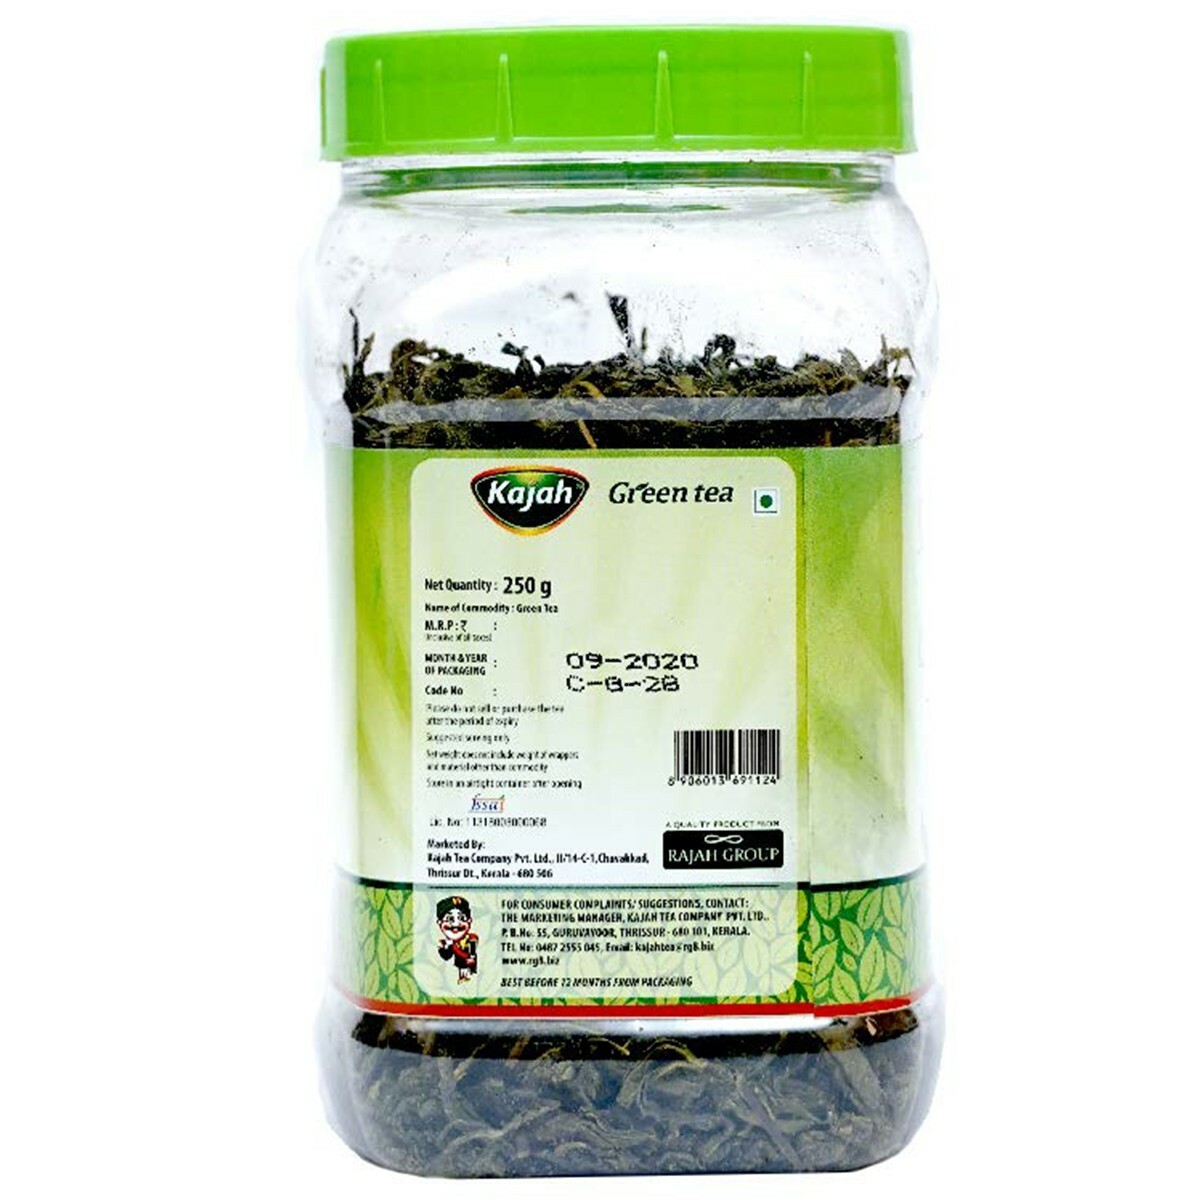 Kajah Green Tea jar 250g